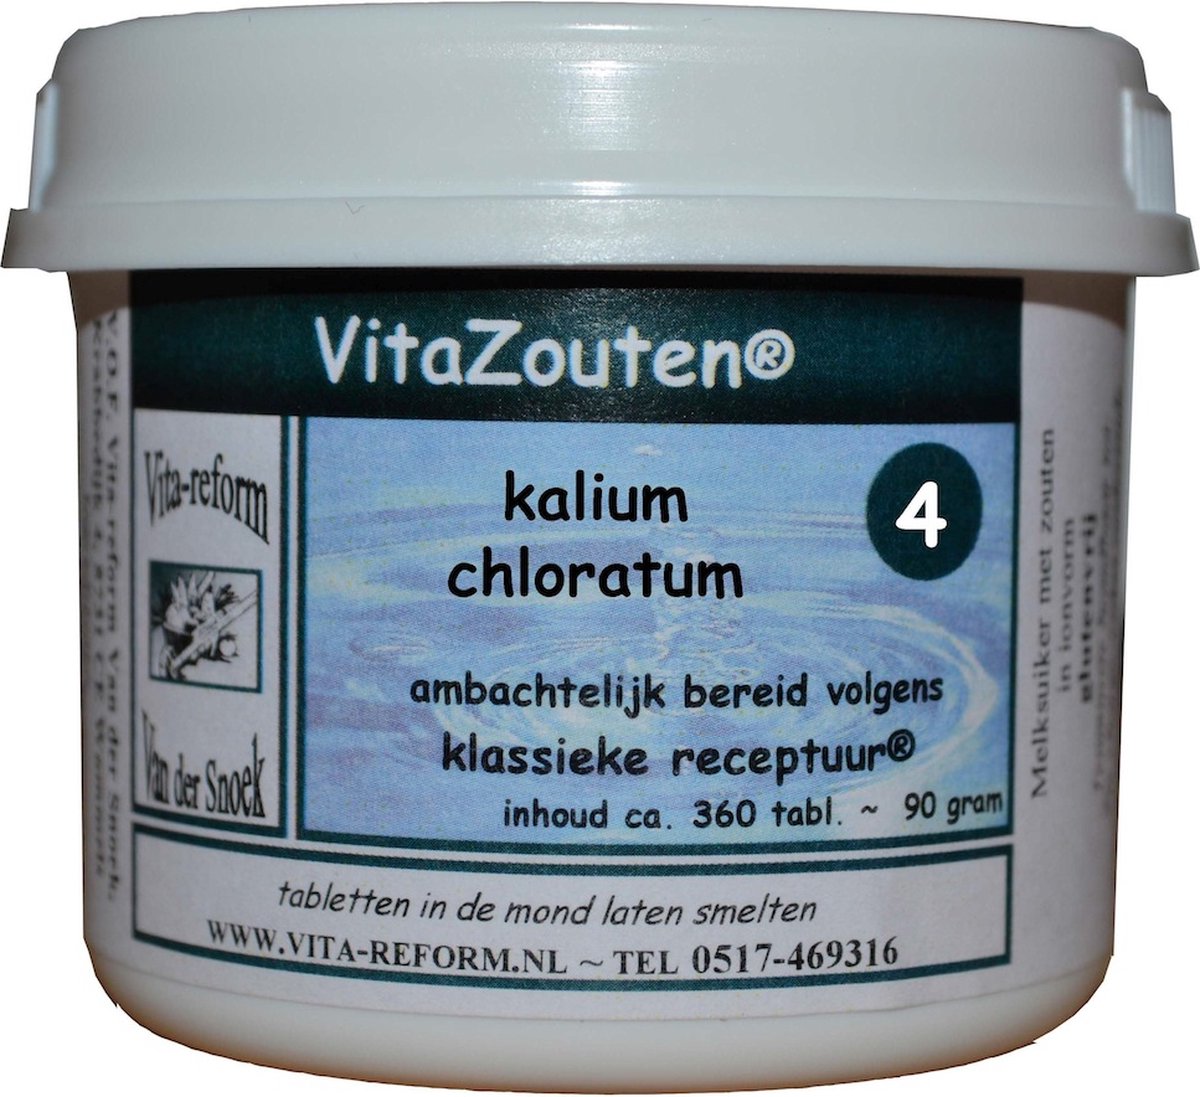 VITAZOUTEN KALIUM MUR/CHL 4/6 - Vita Reform Van der Snoek